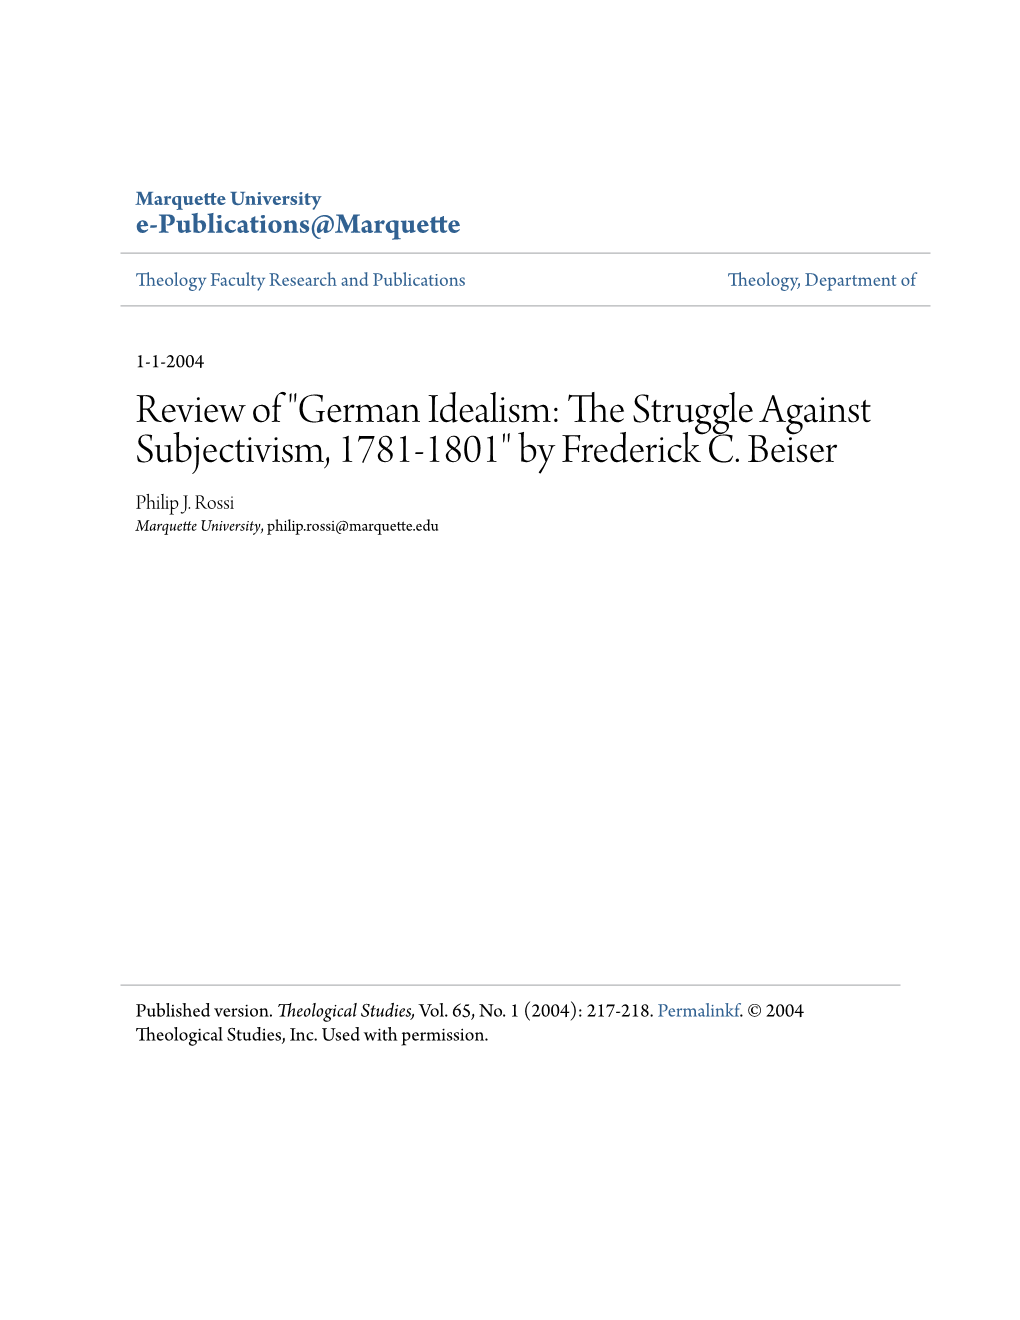 German Idealism: the Struggle Against Subjectivism, 1781-1801